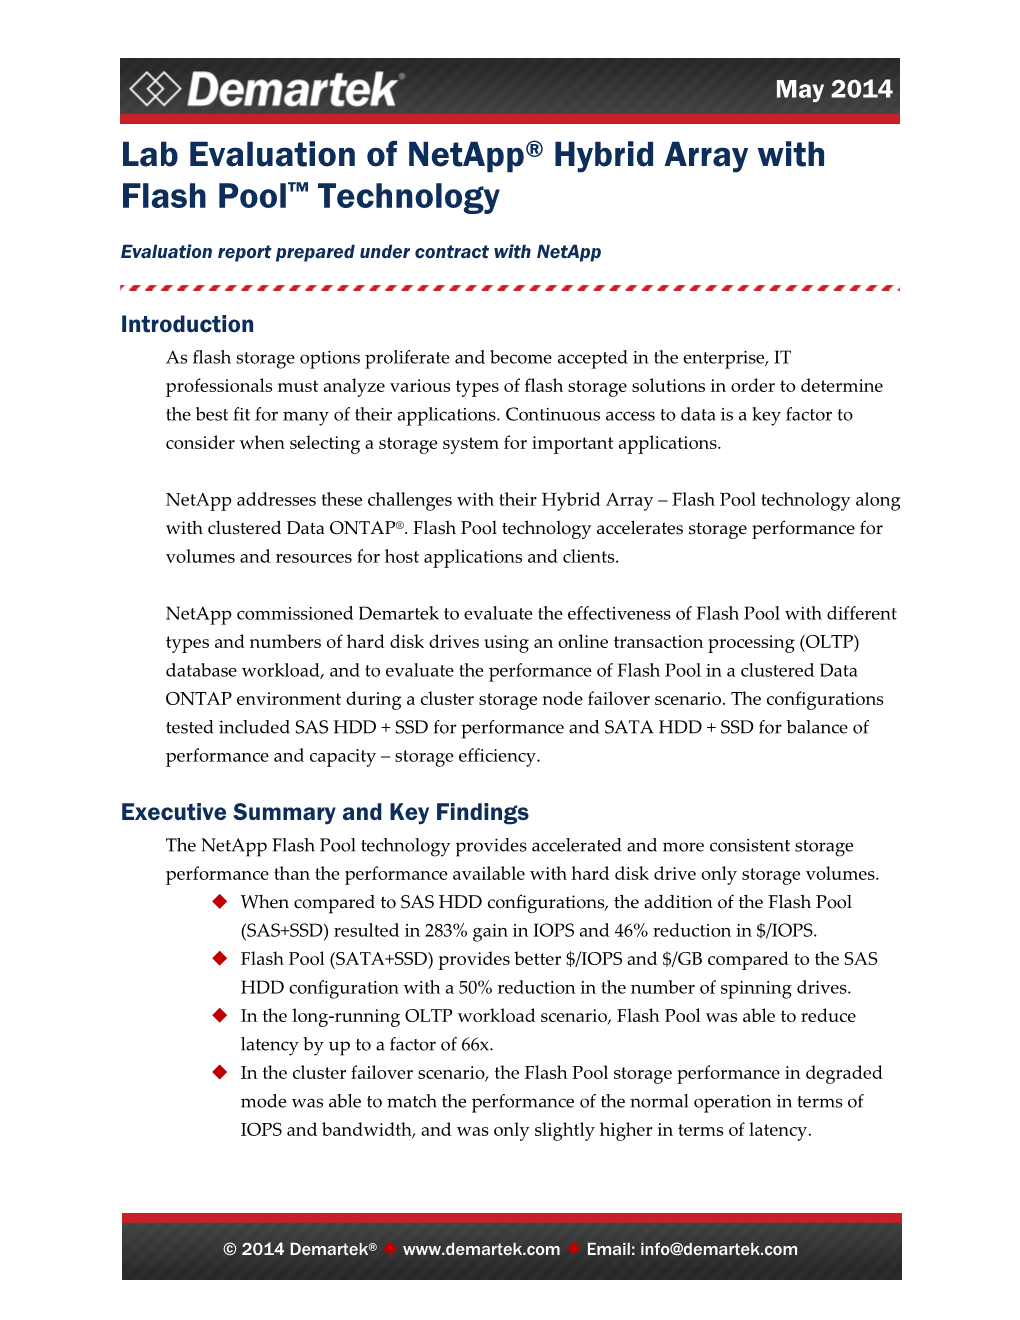 View the Demartek Evaluation of Netapp Hybrid Array with Flash